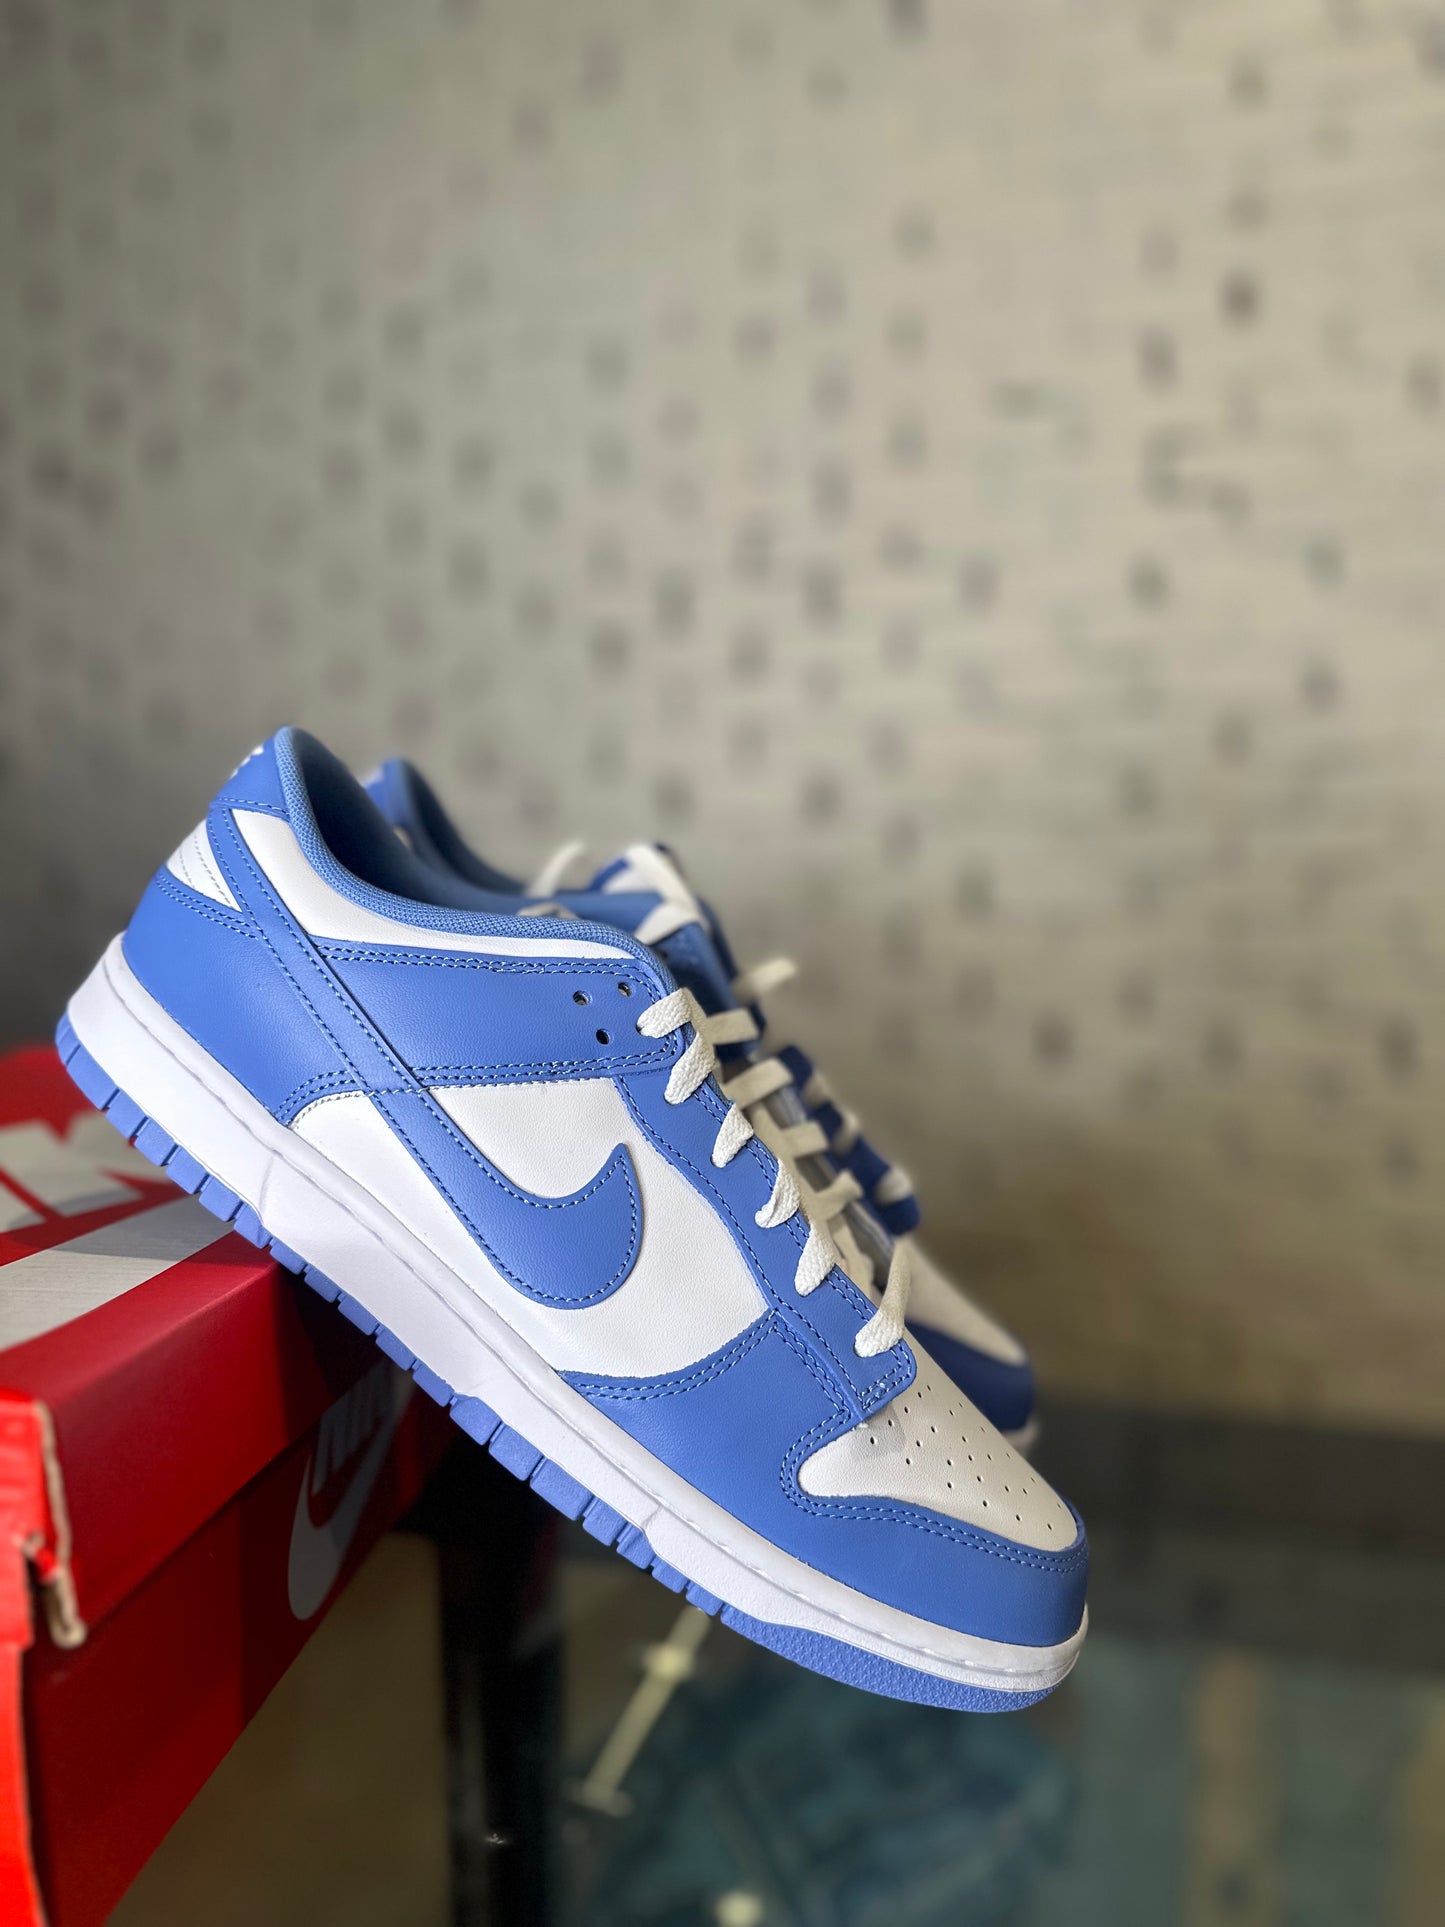 Nike Dunk Low Retro “Polar Blue” Size 11.5 DS OG